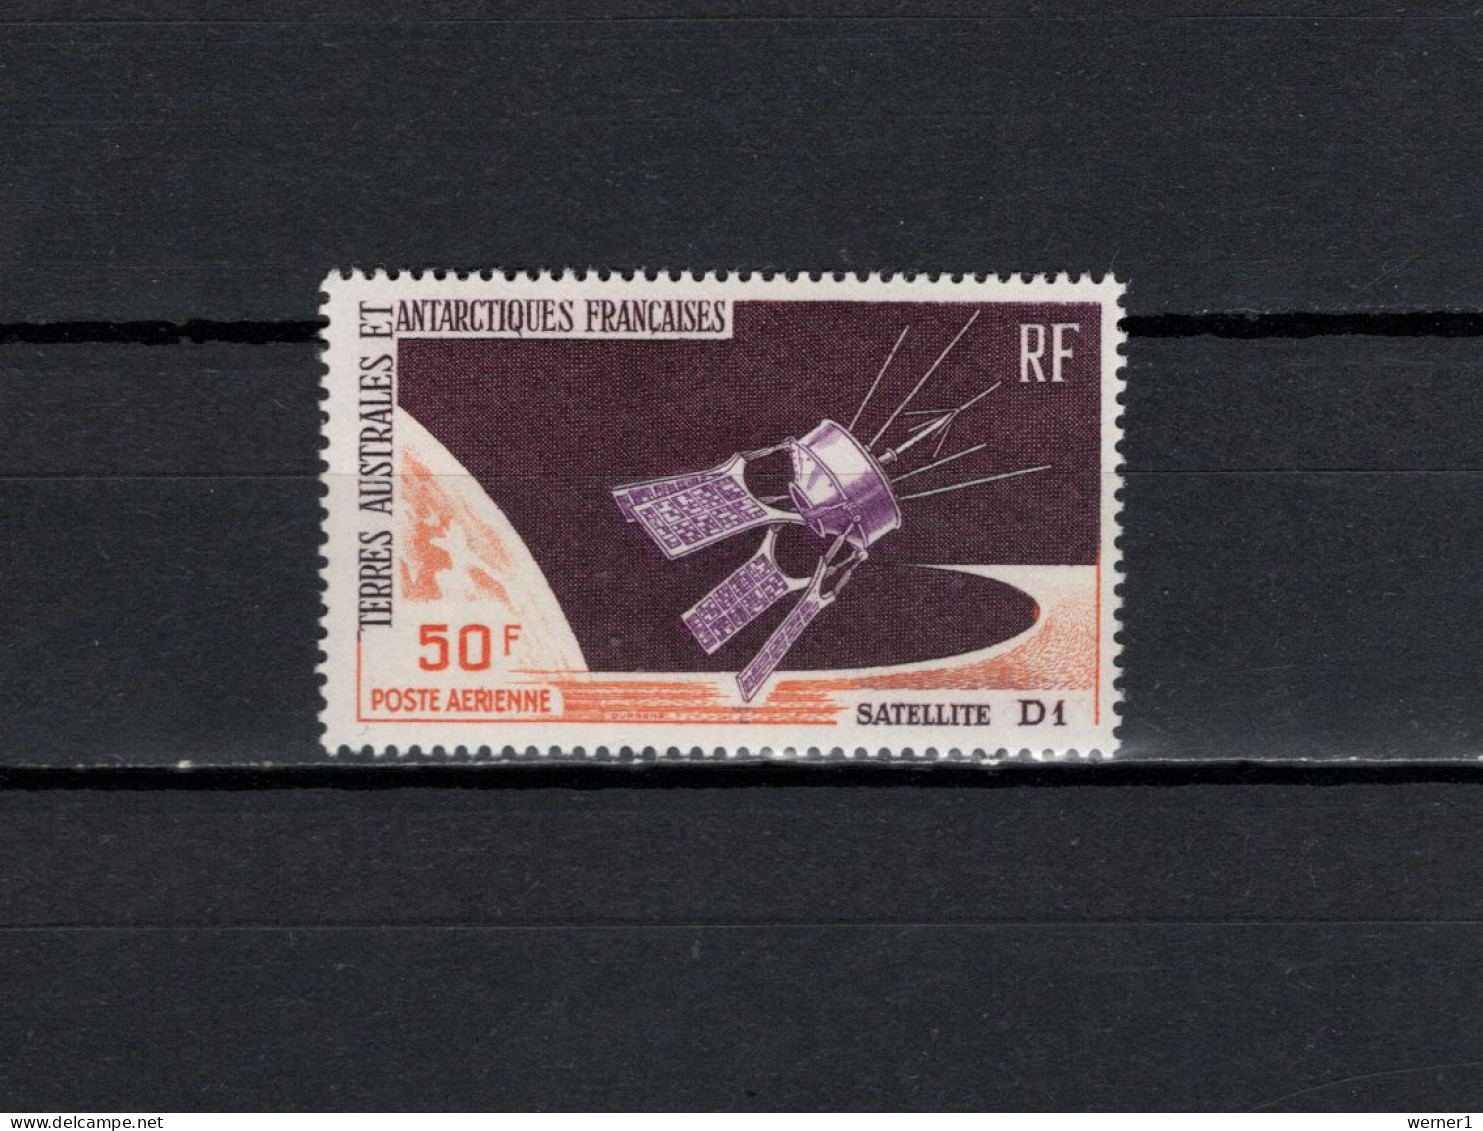 FSAT French Antarctic Territory 1966 Space, D1 Satellite Stamp MNH - Oceanië